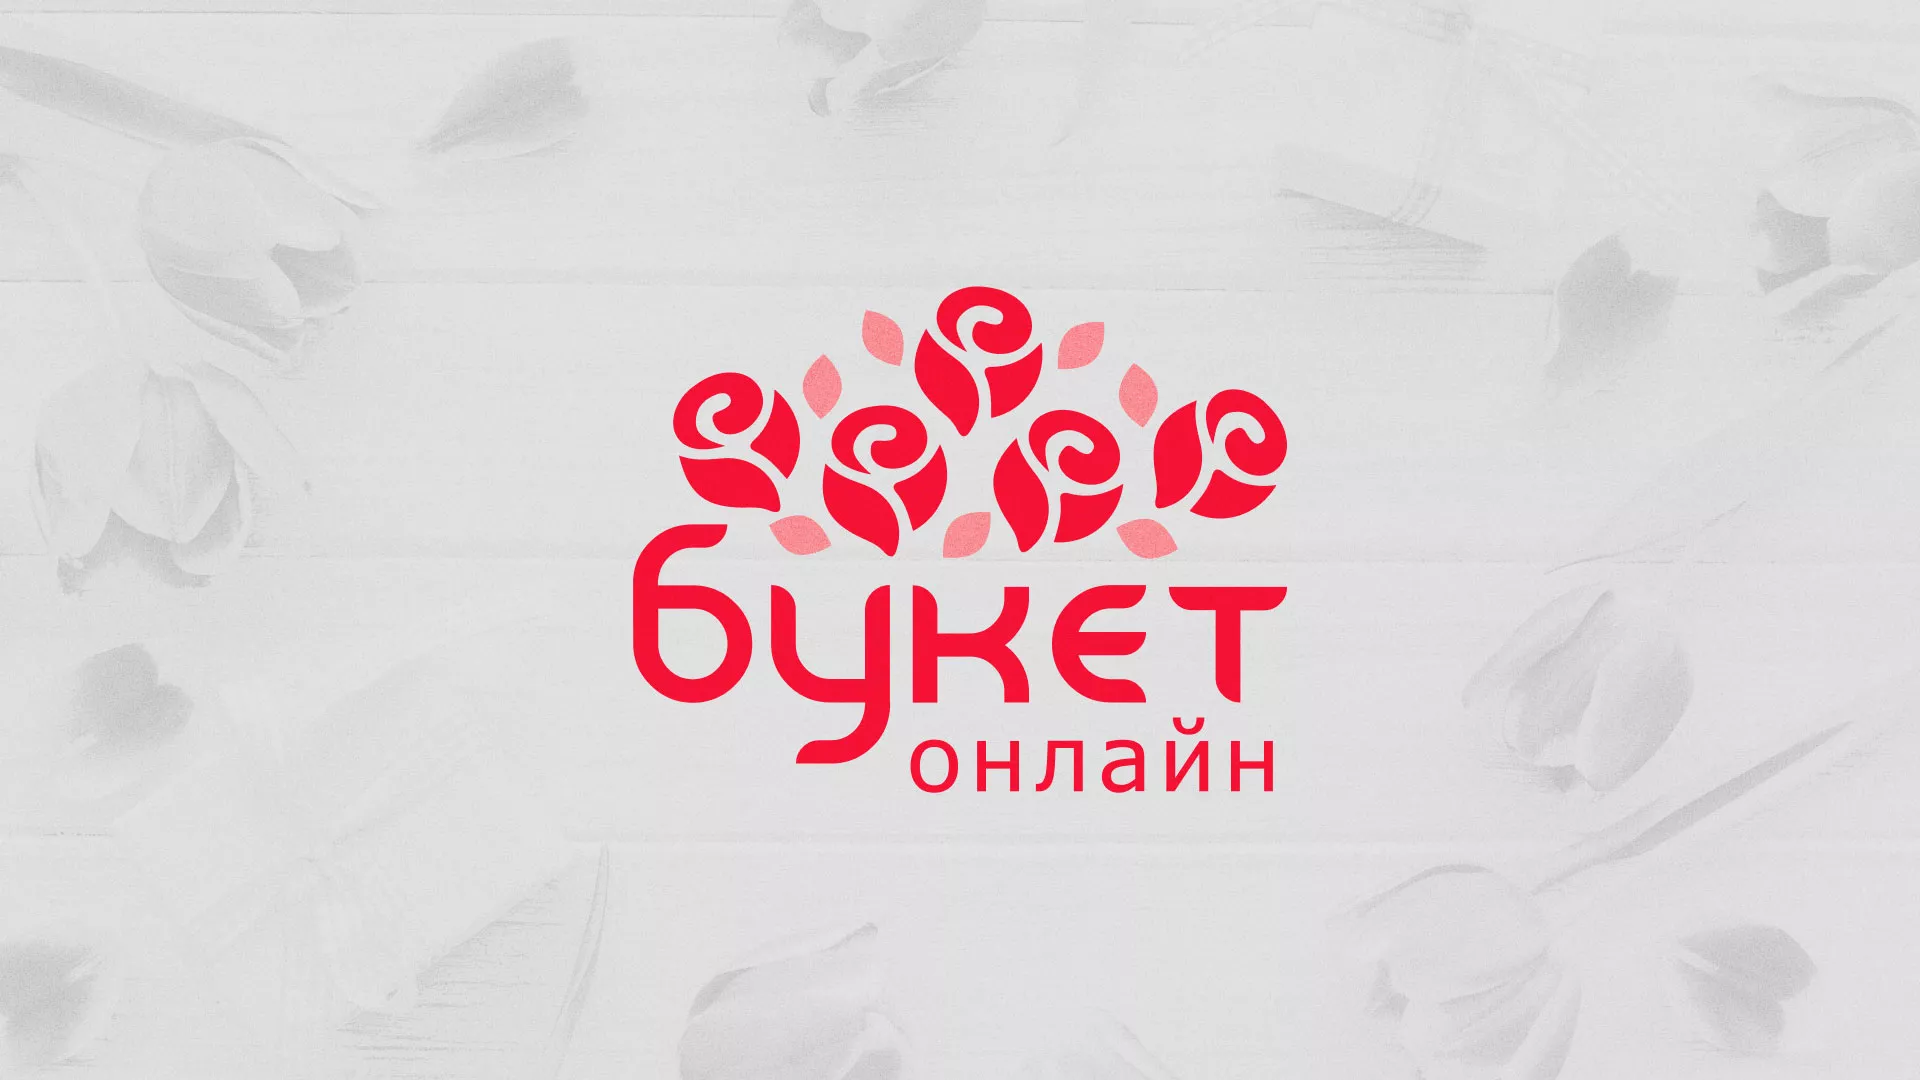 Создание интернет-магазина «Букет-онлайн» по цветам в Ликино-Дулево